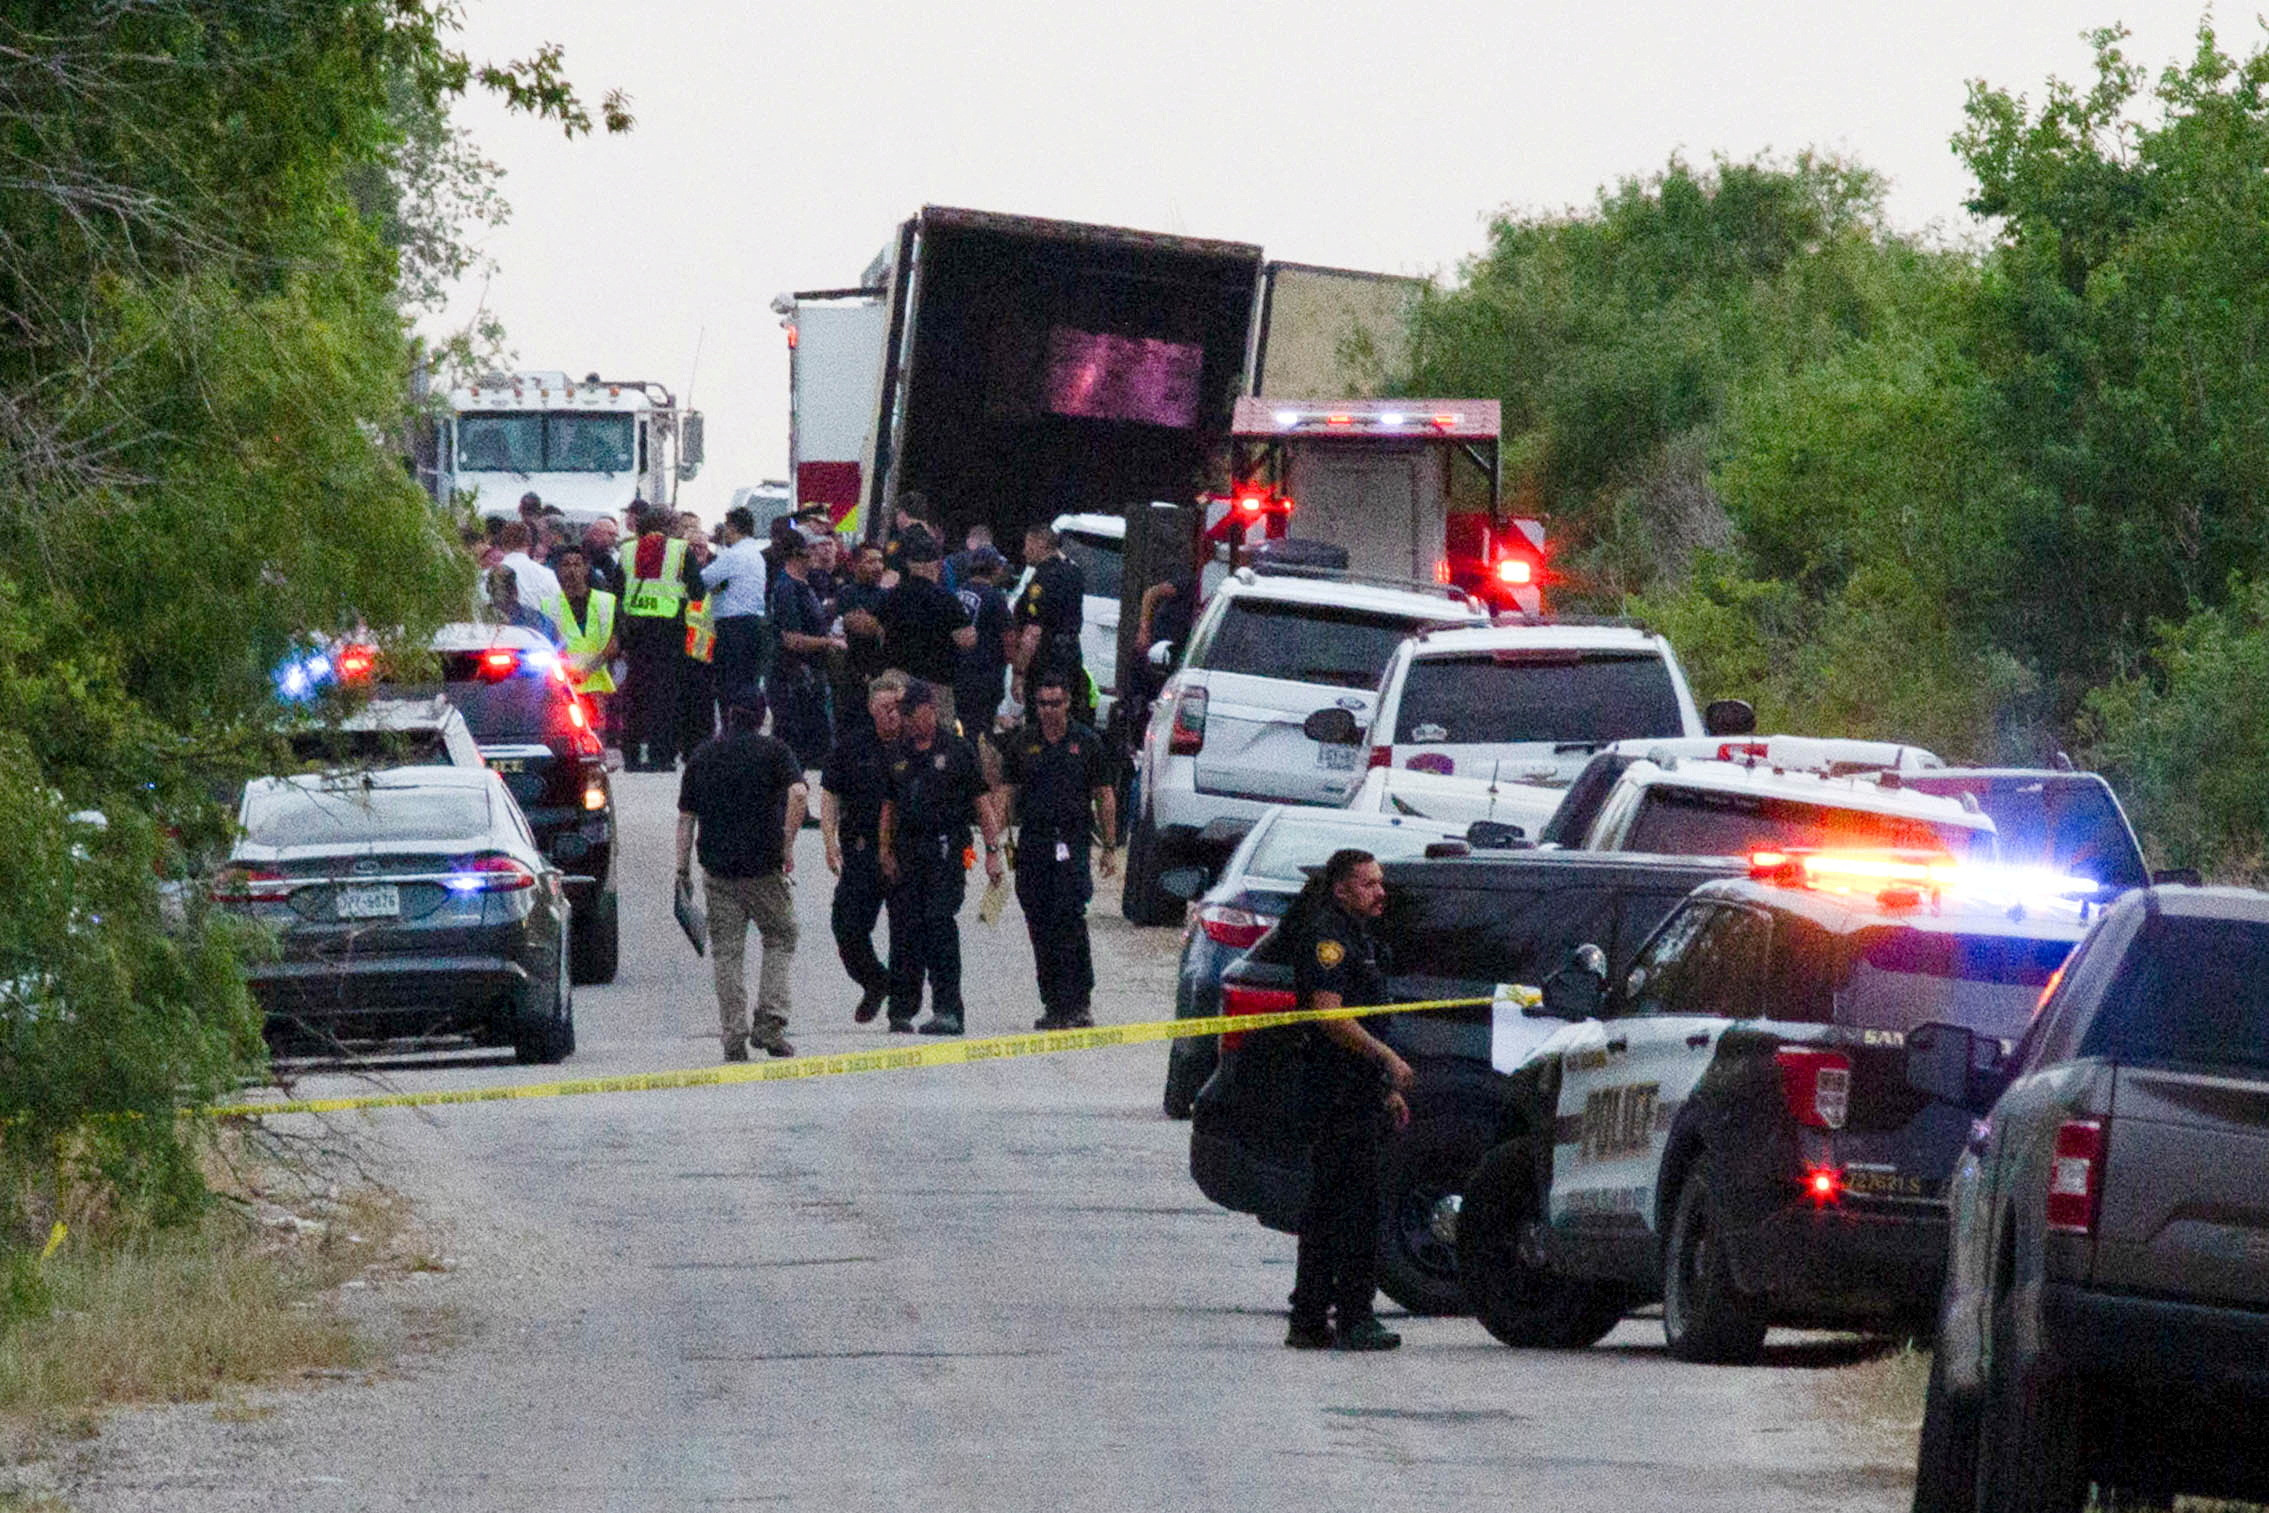 46 migrants found dead in truck in US